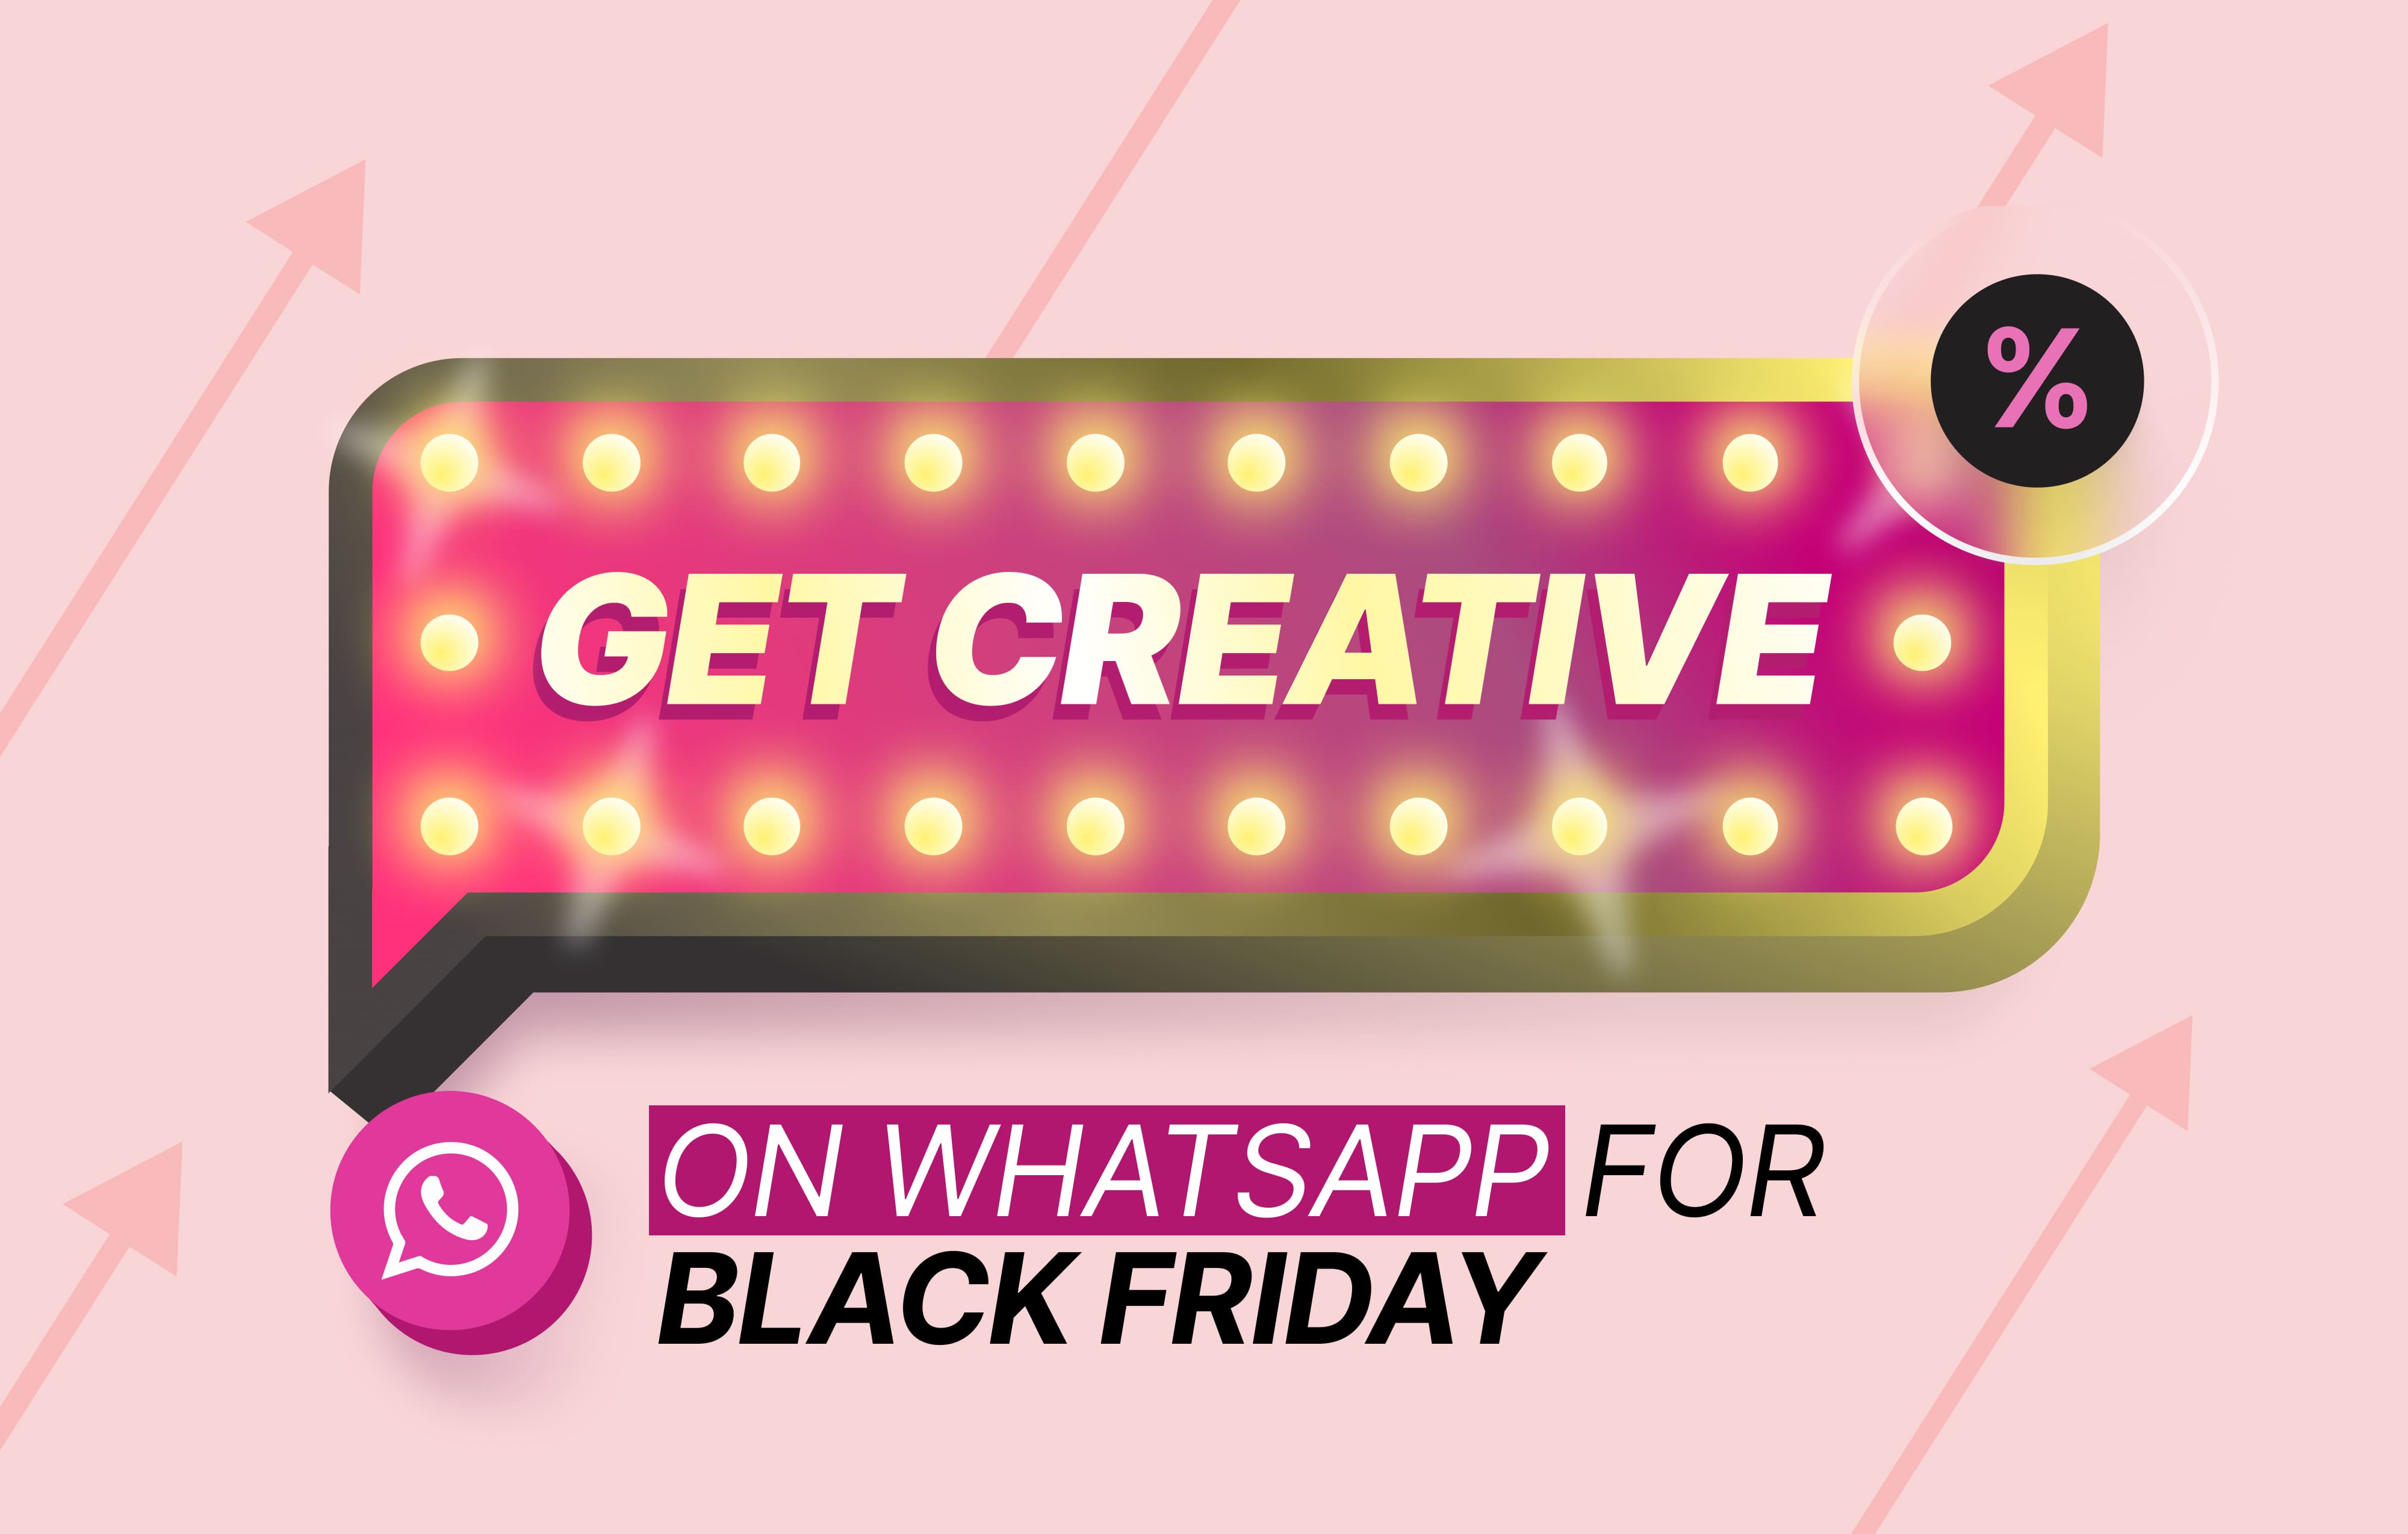 WhatsApp marketing tips for Black Friday